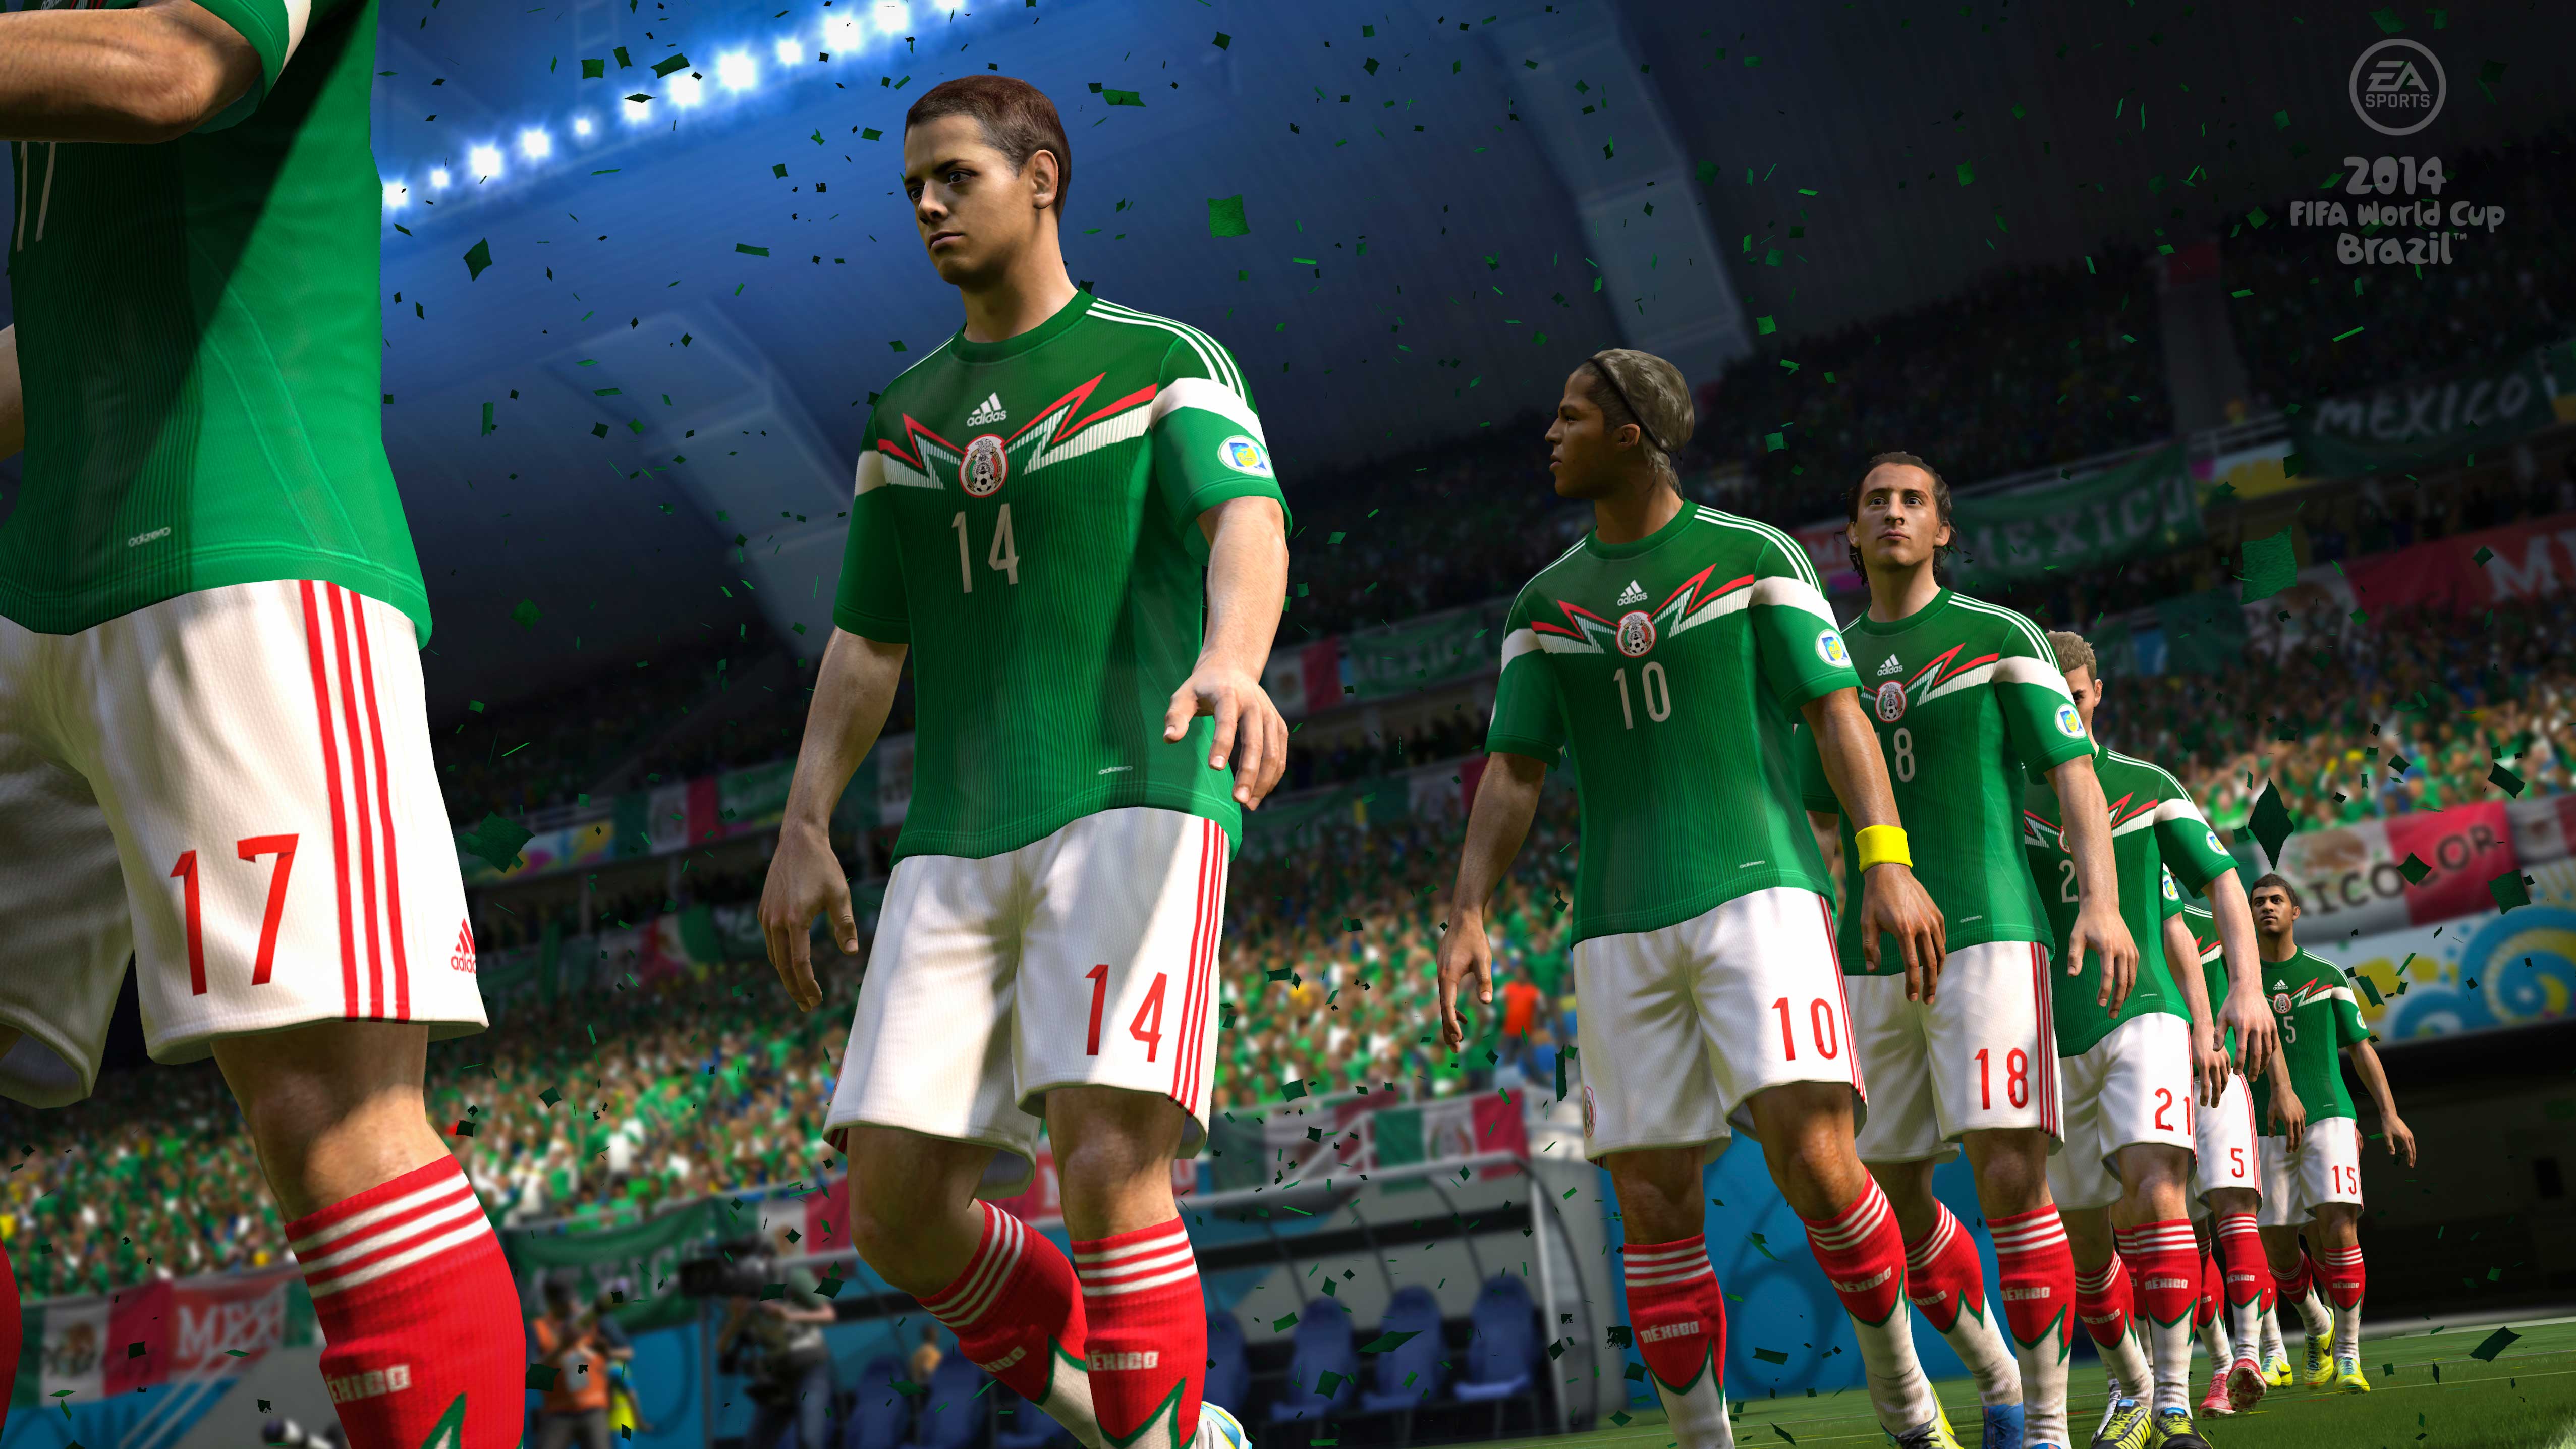 Fifa brazil. 2014 FIFA World Cup Brazil. FIFA World Cup 2014 игра. 2014 FIFA World Cup (Xbox 360). EA Sports 2014 FIFA World Cup Brazil.